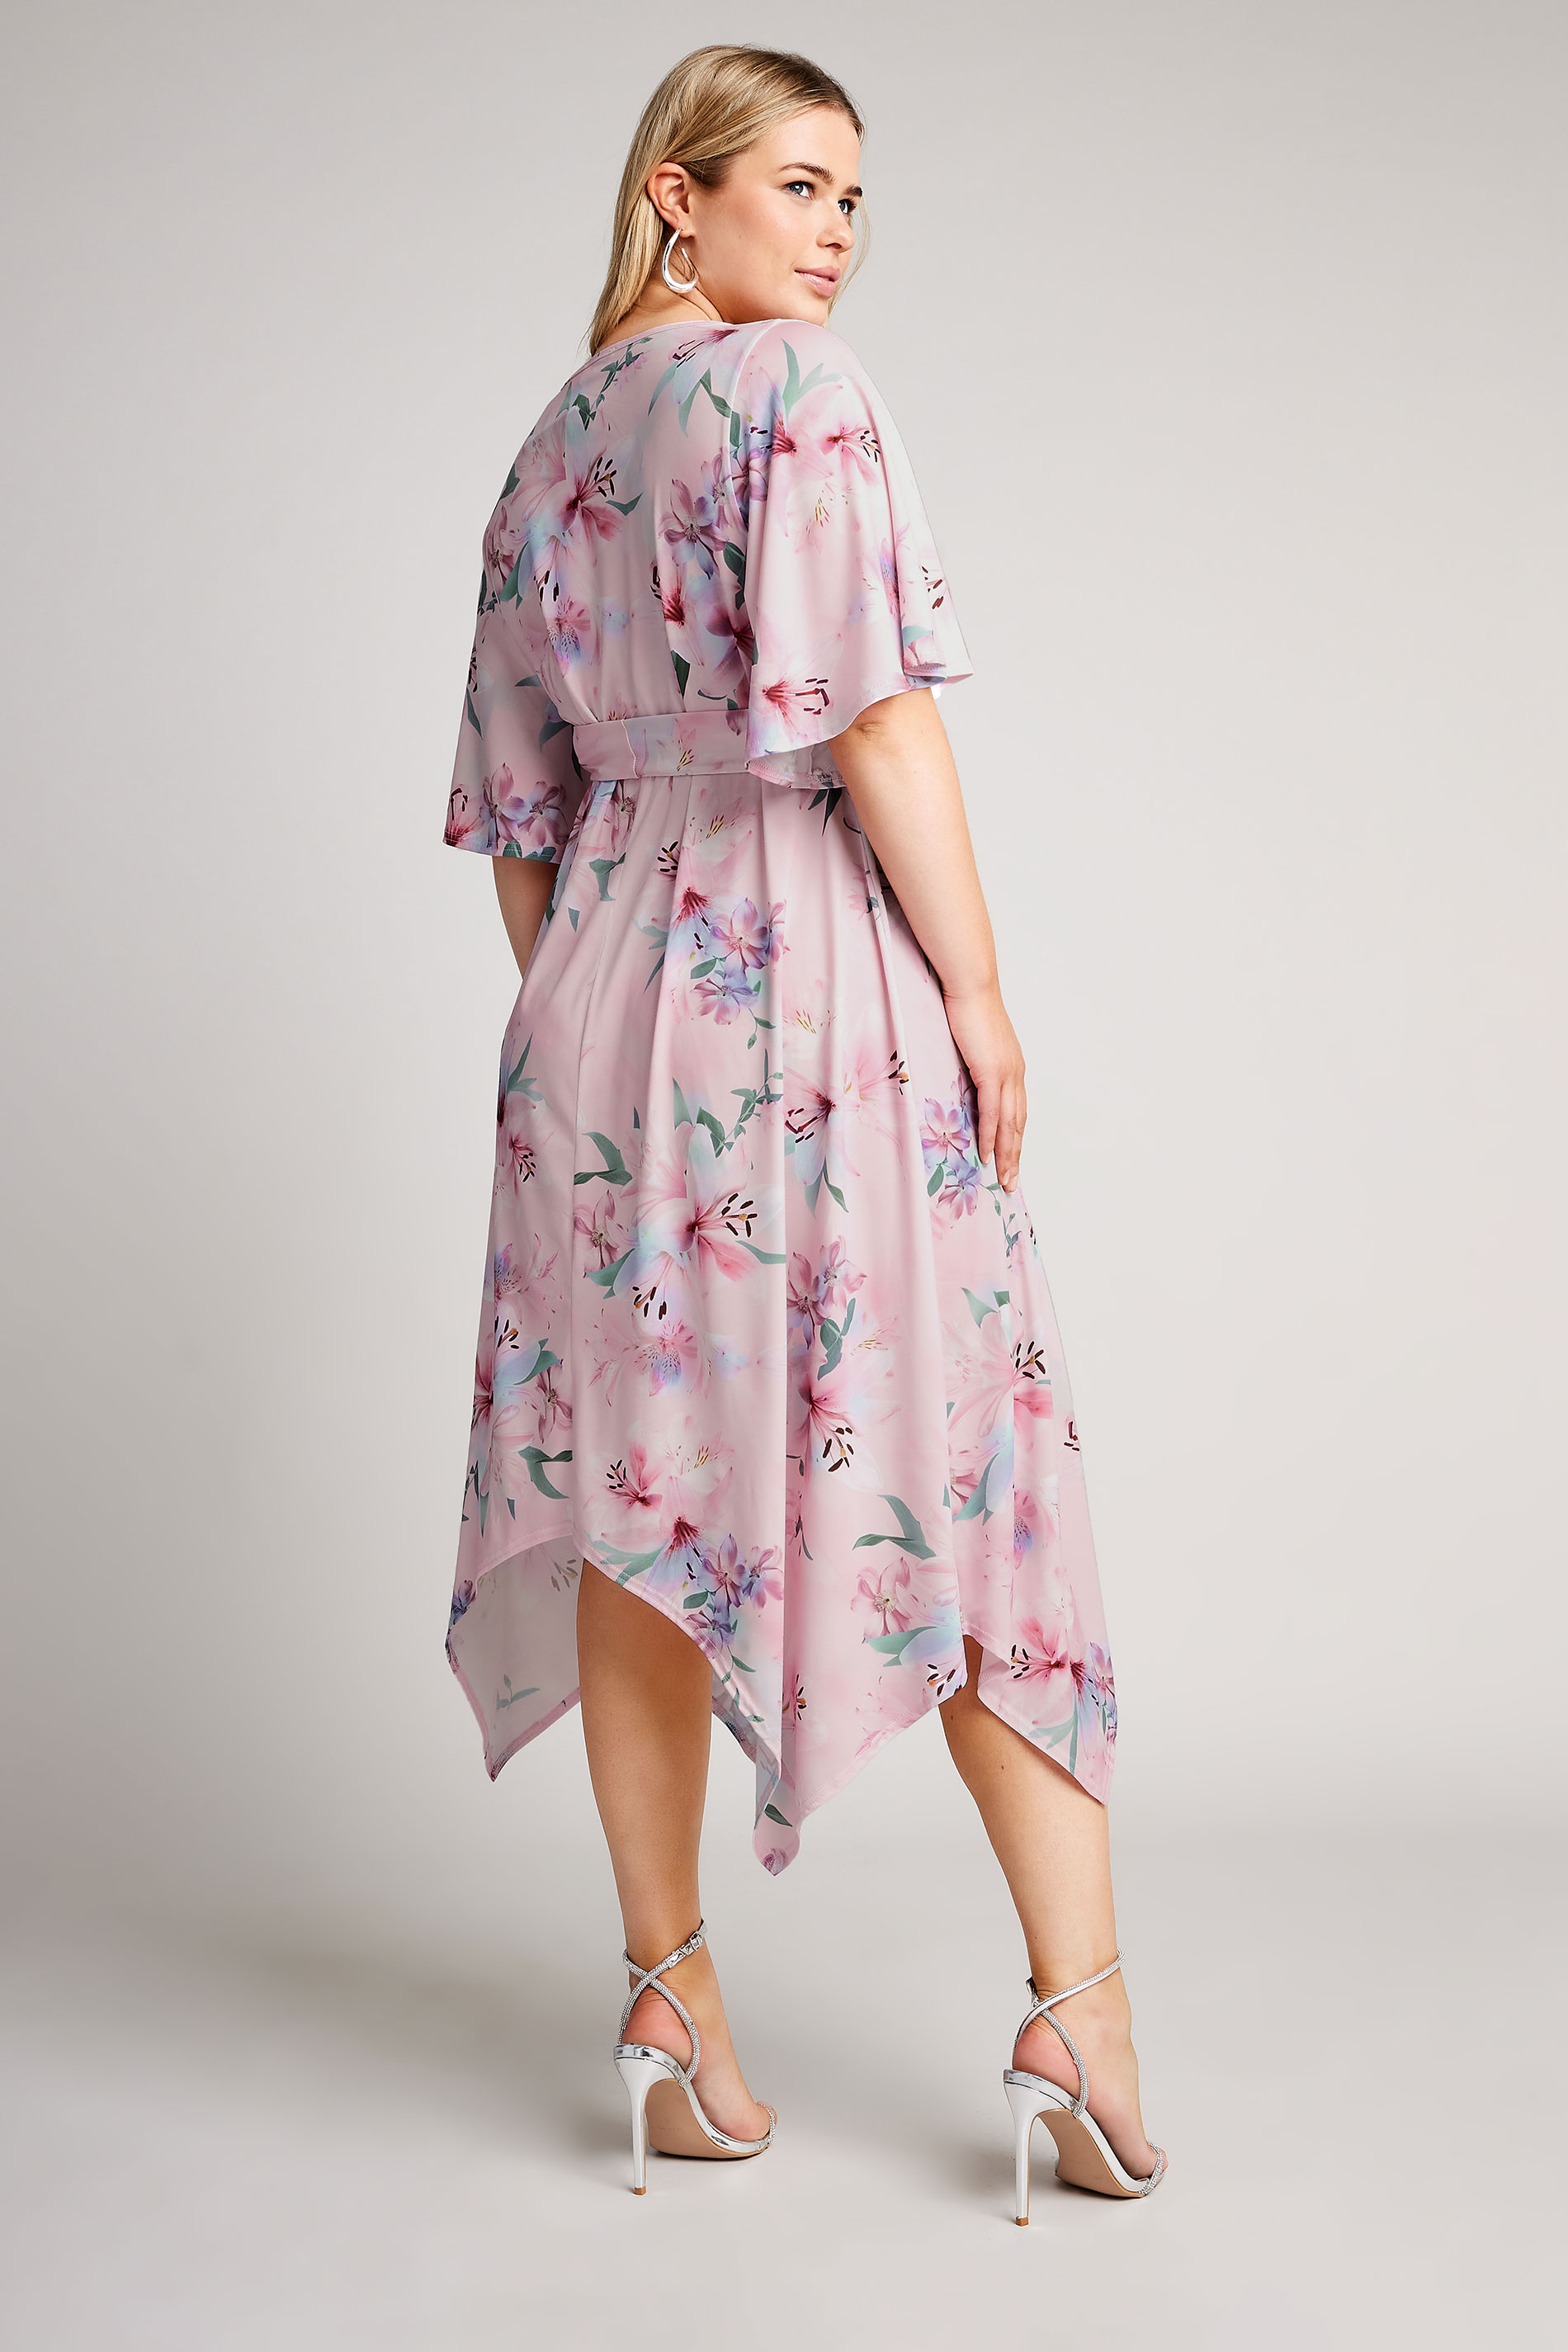 YOURS LONDON Plus Size Light Pink Floral Print Hanky Hem Wrap Dress | Yours Clothing 3